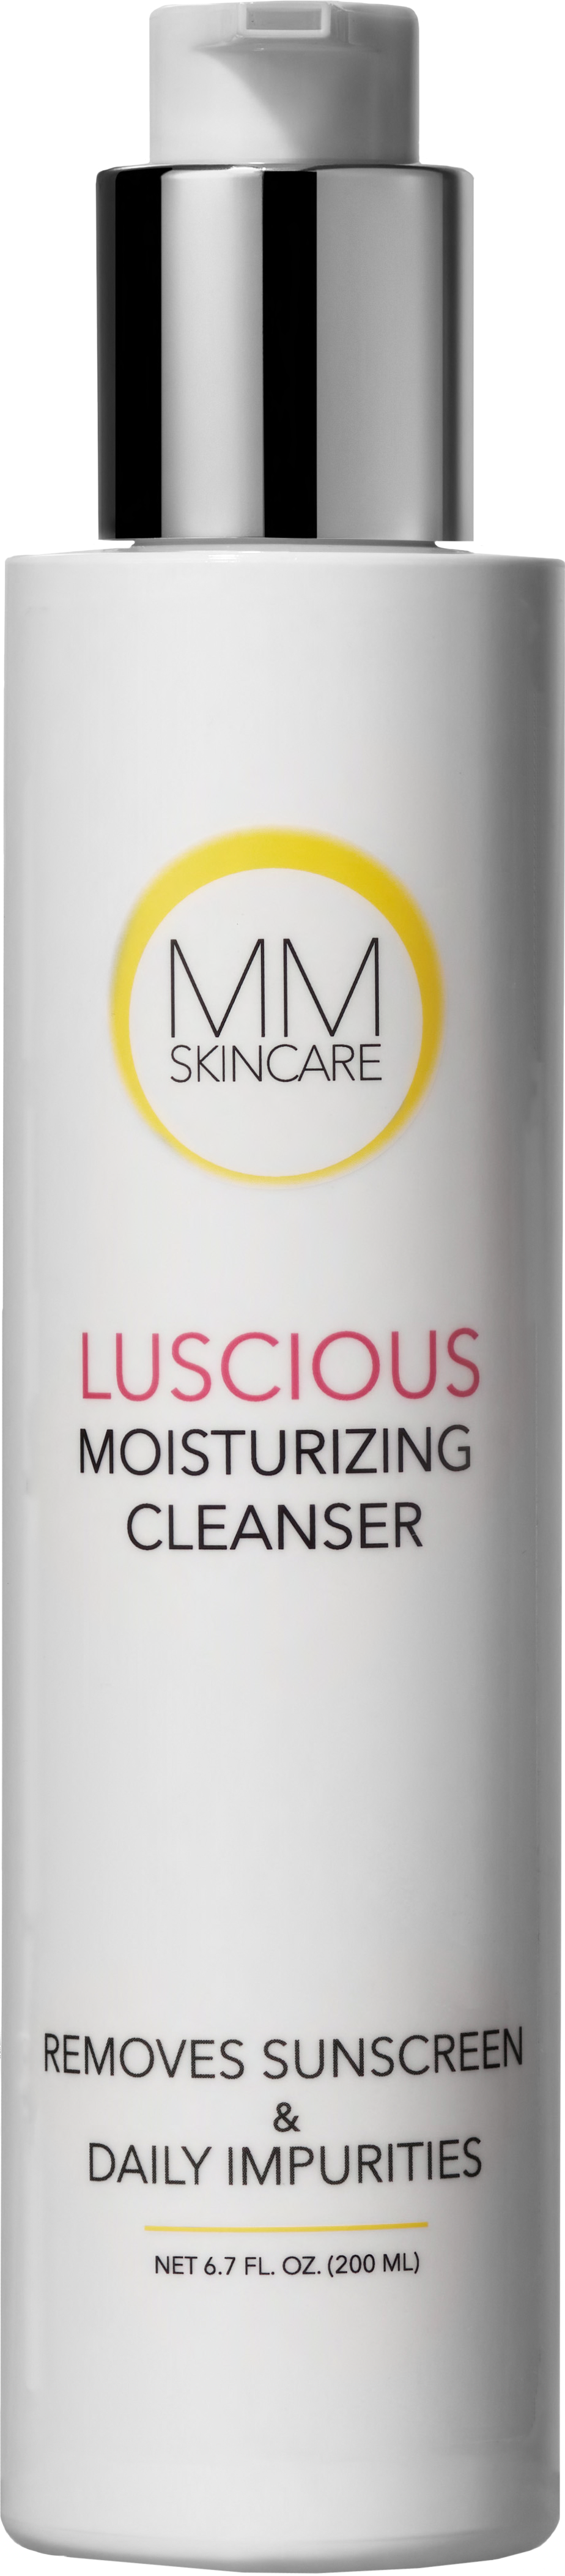 Luscious Moisturizing Cleanser - MMSkincare